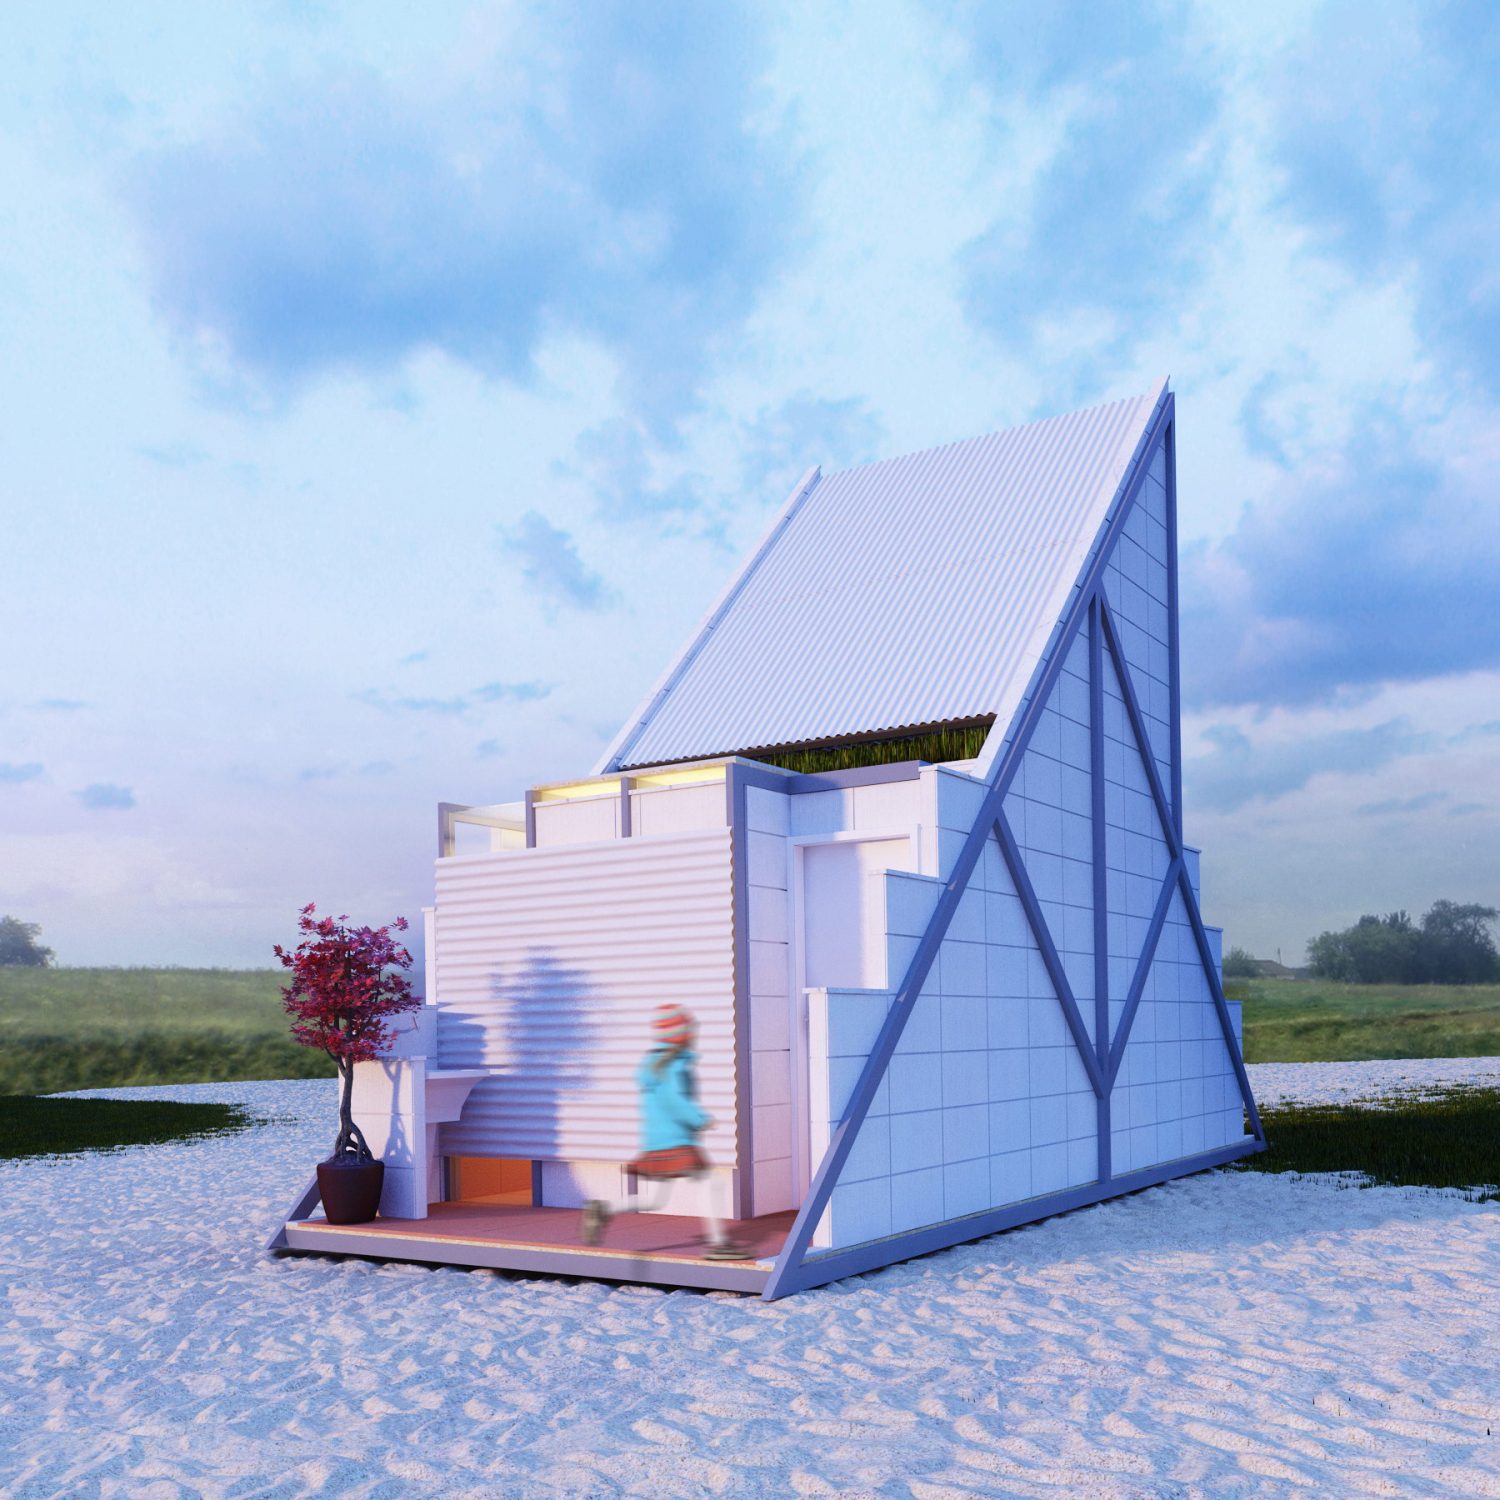 Triangular Micro House by Felipe Campolina